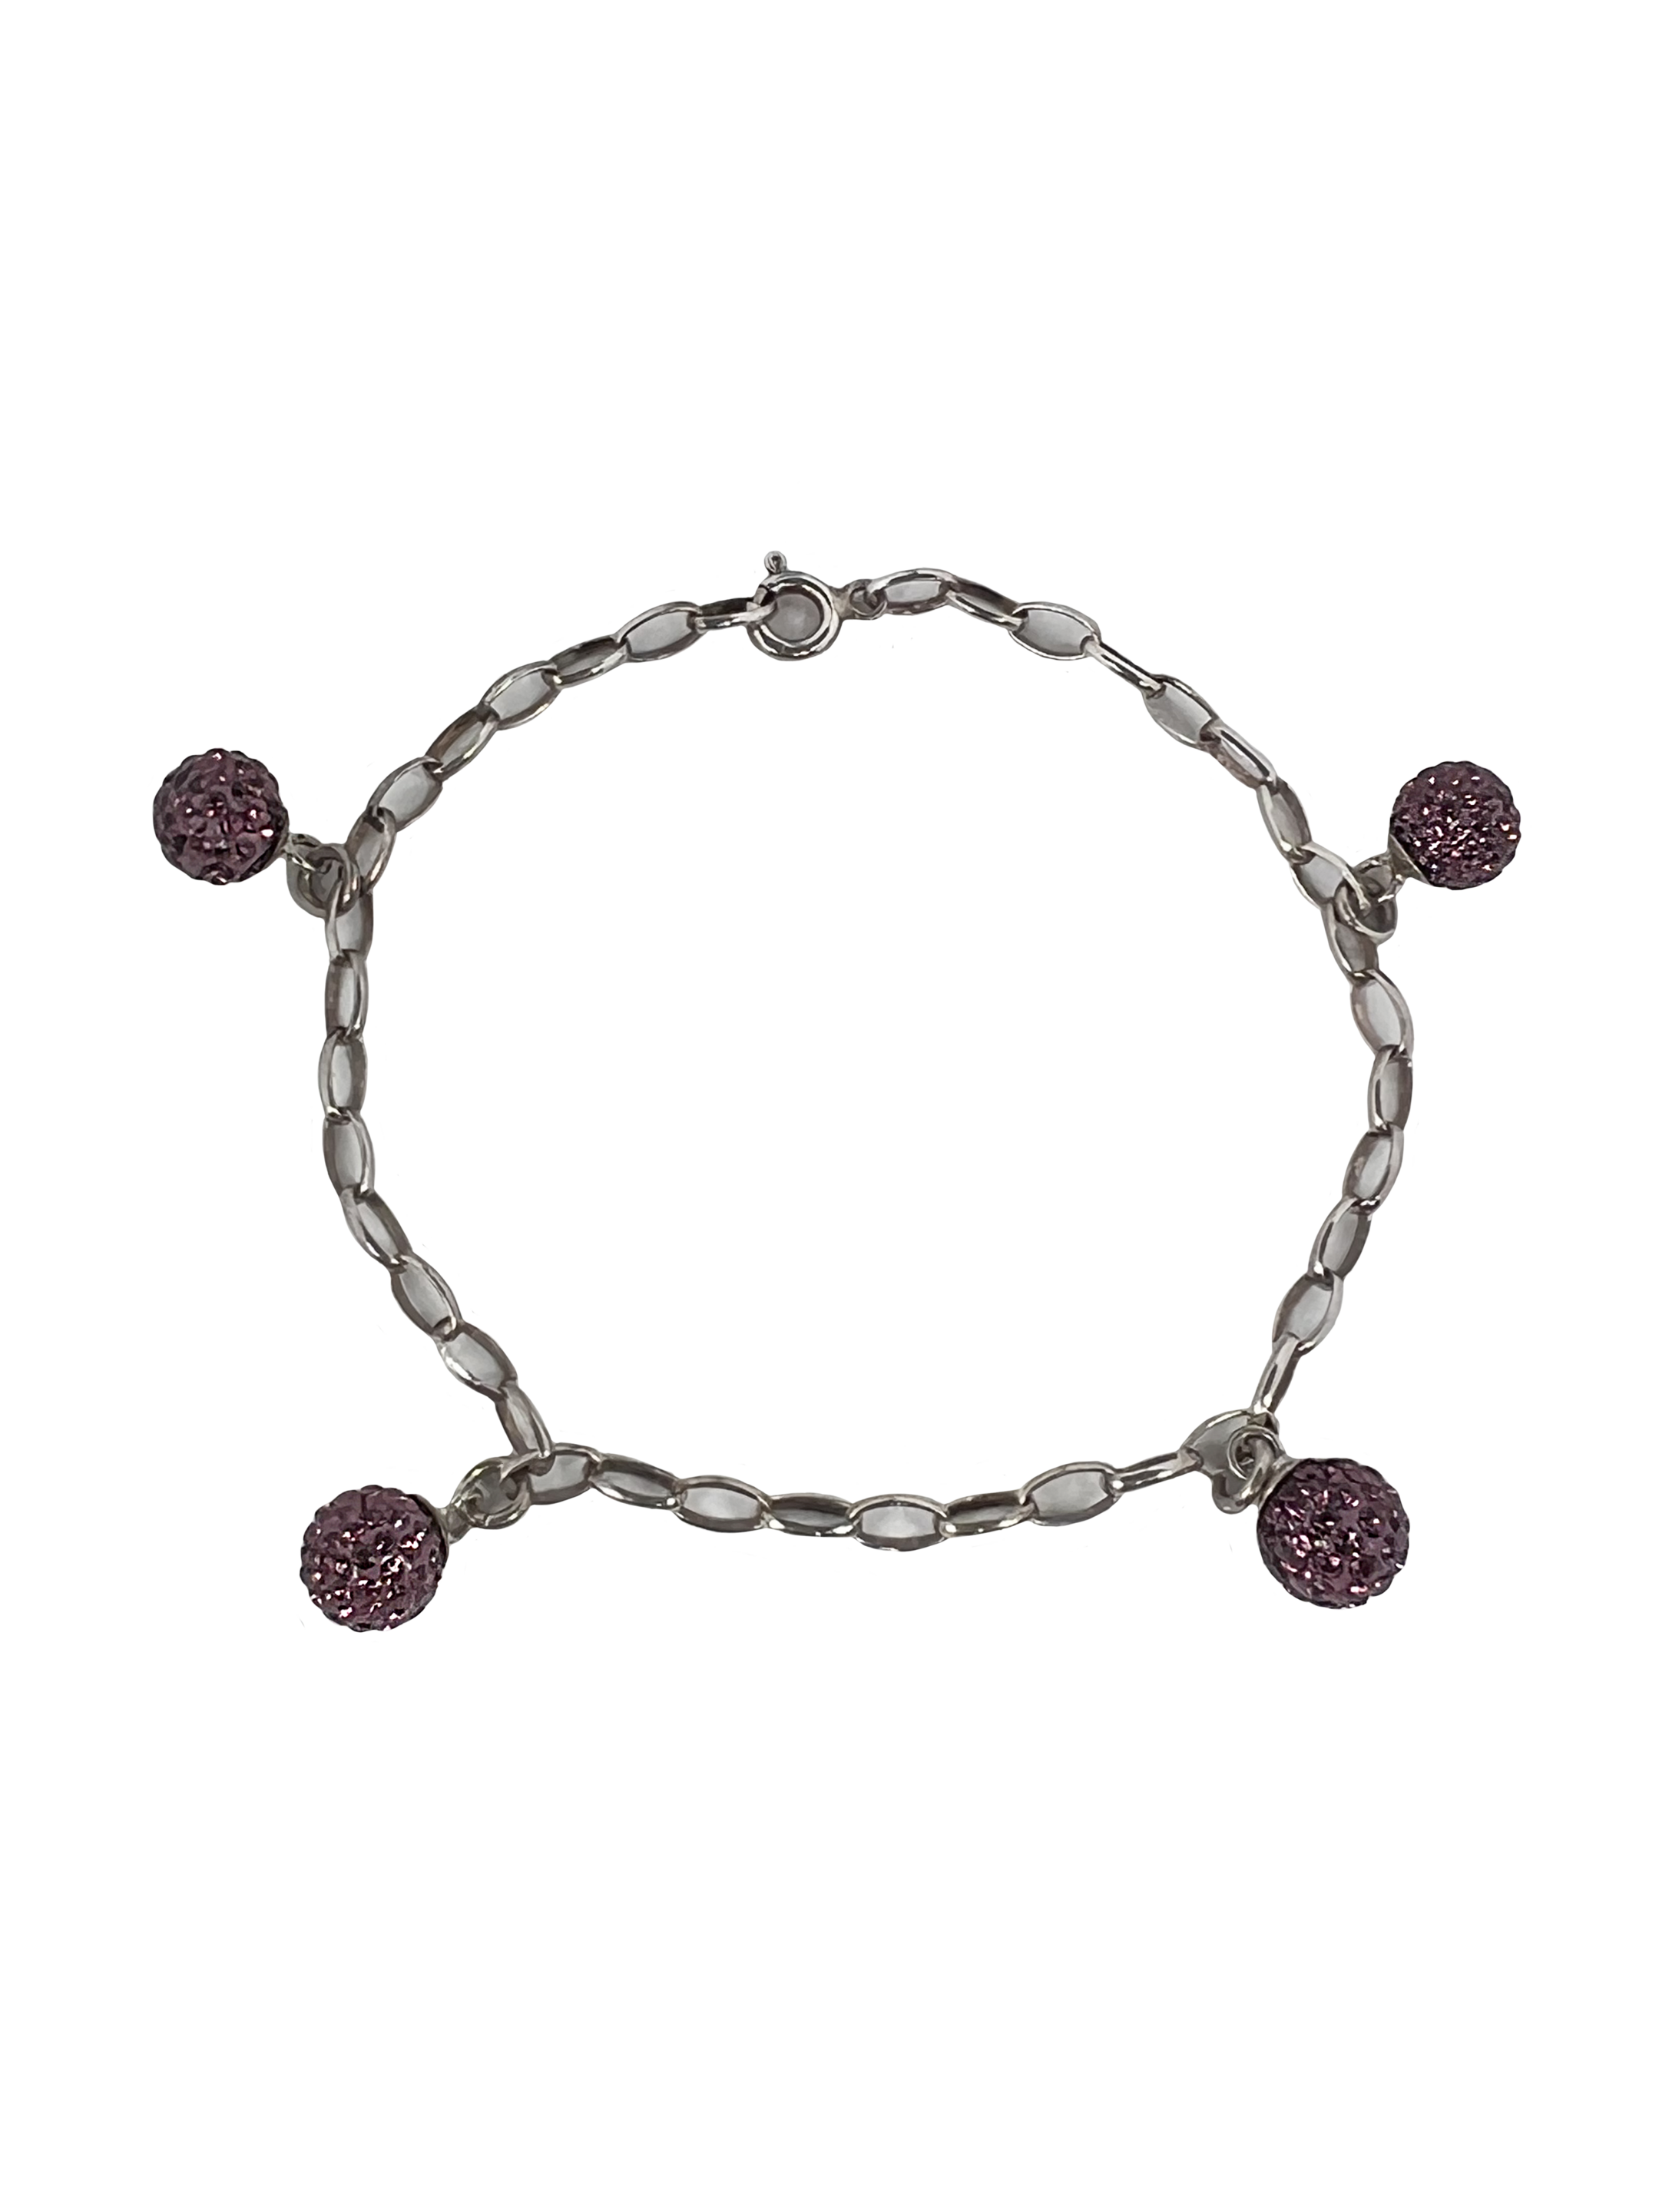 Silver modern bracelet with purple beads